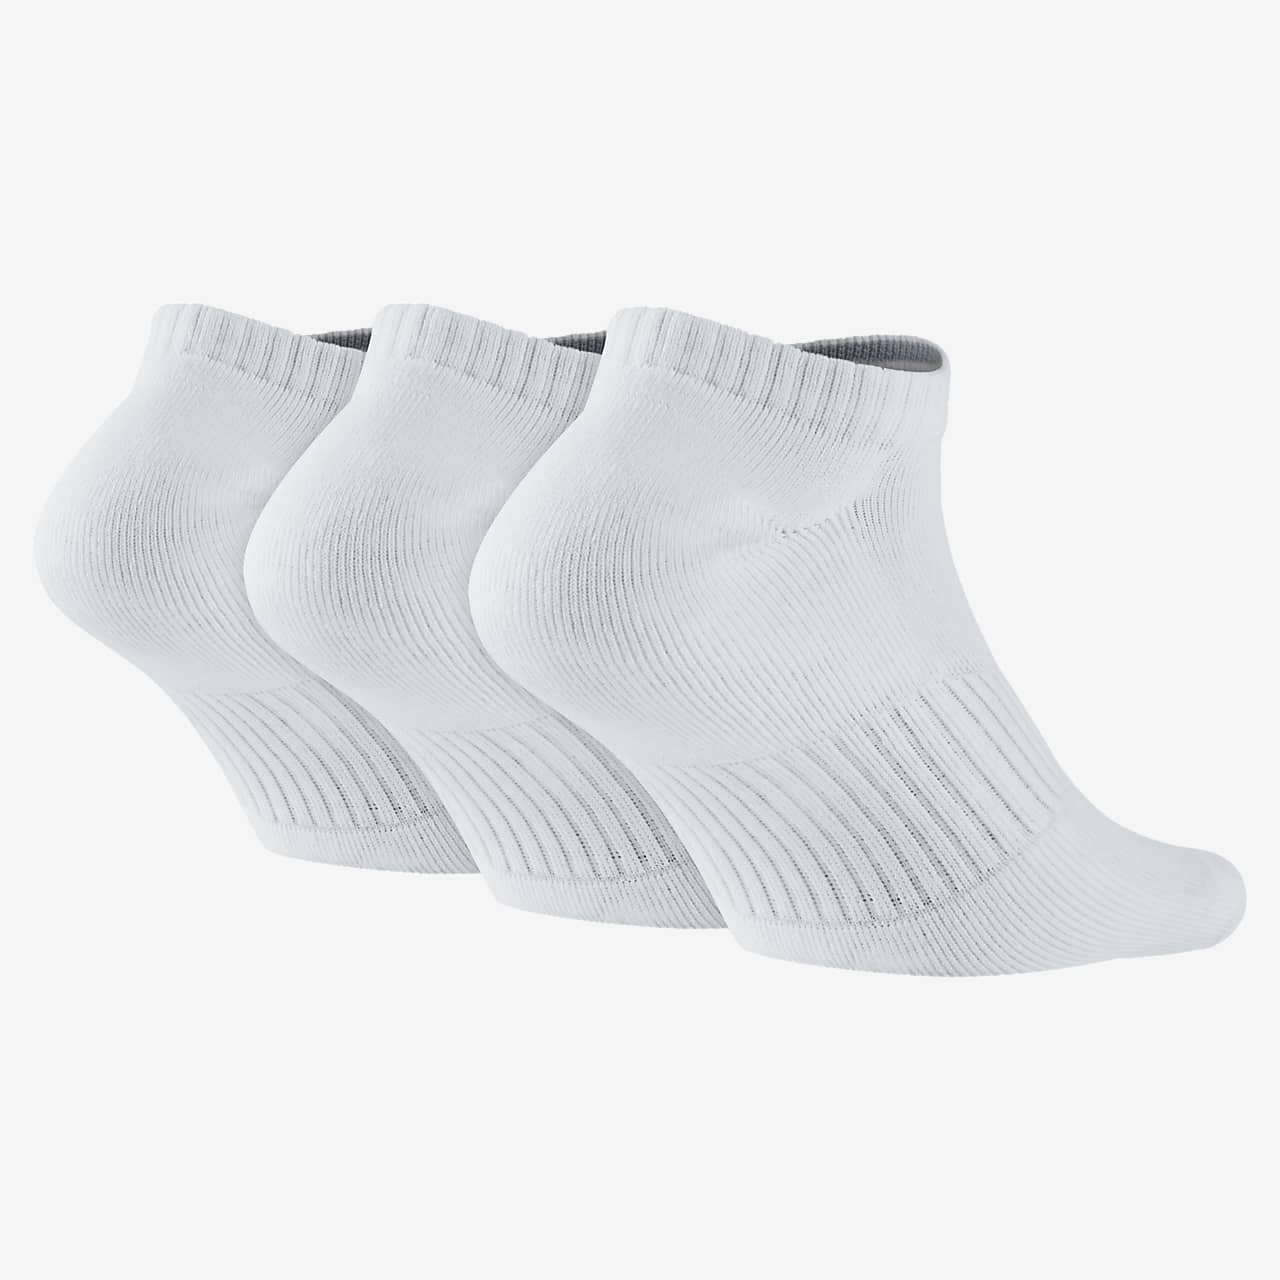 Nike Cotton Cushion No-Show Socks (3 